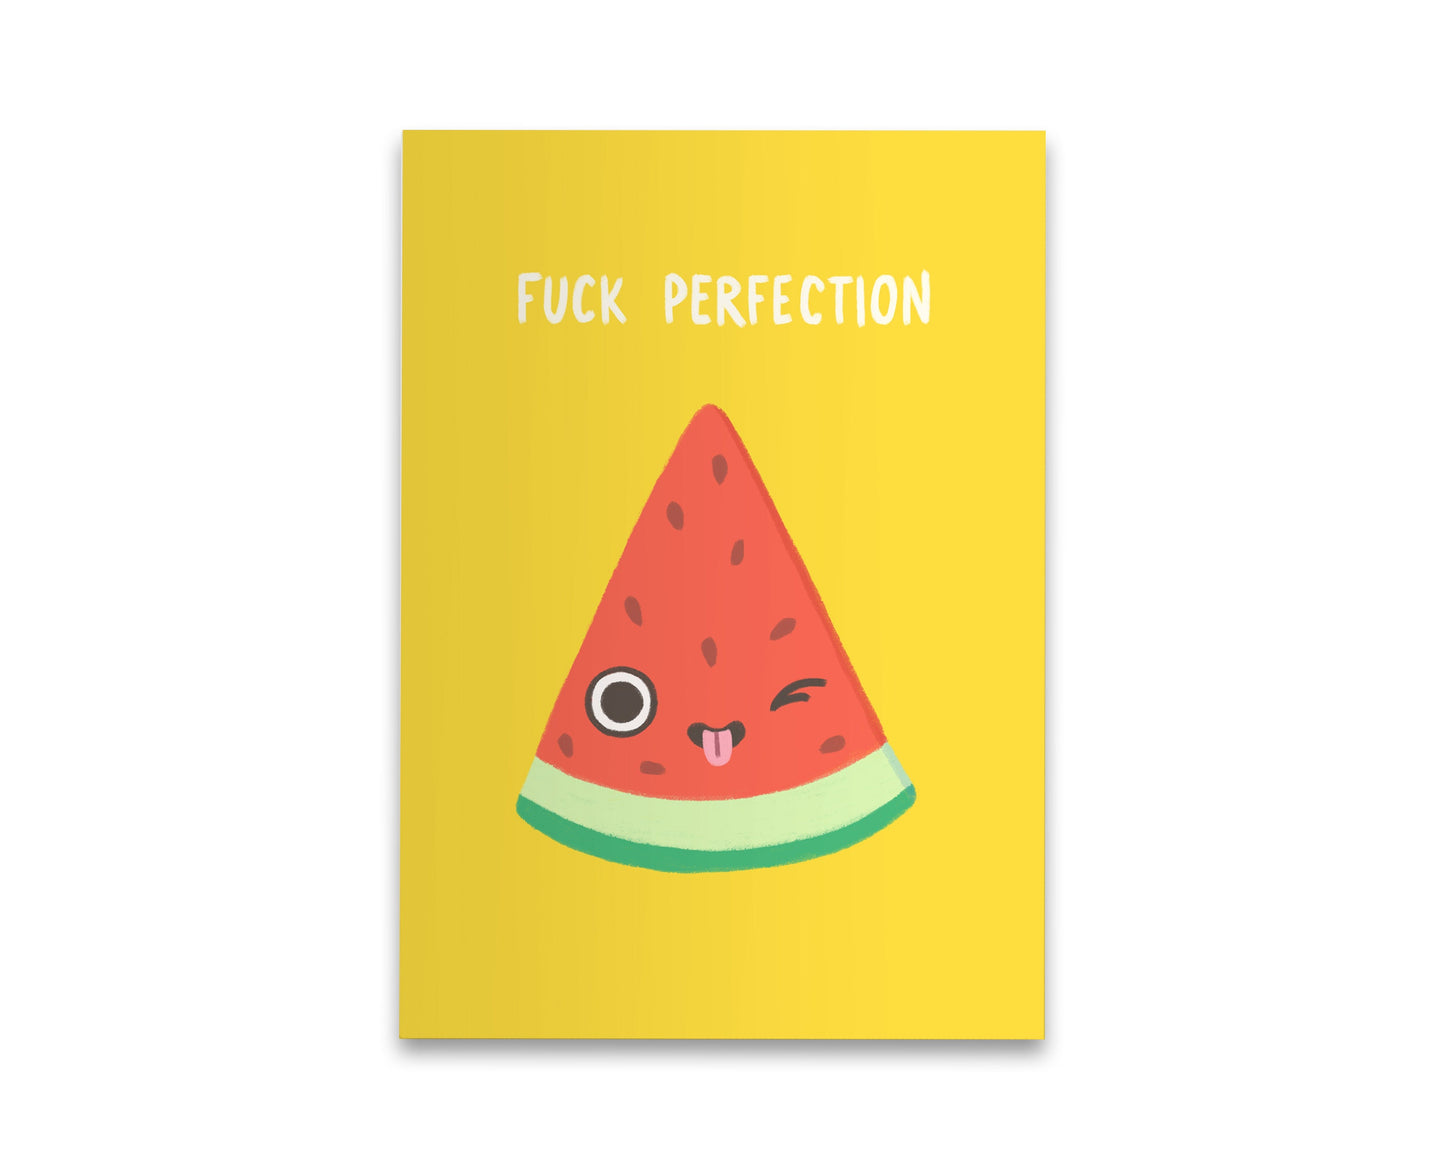 Fuck Perfection Watermelon Postcard